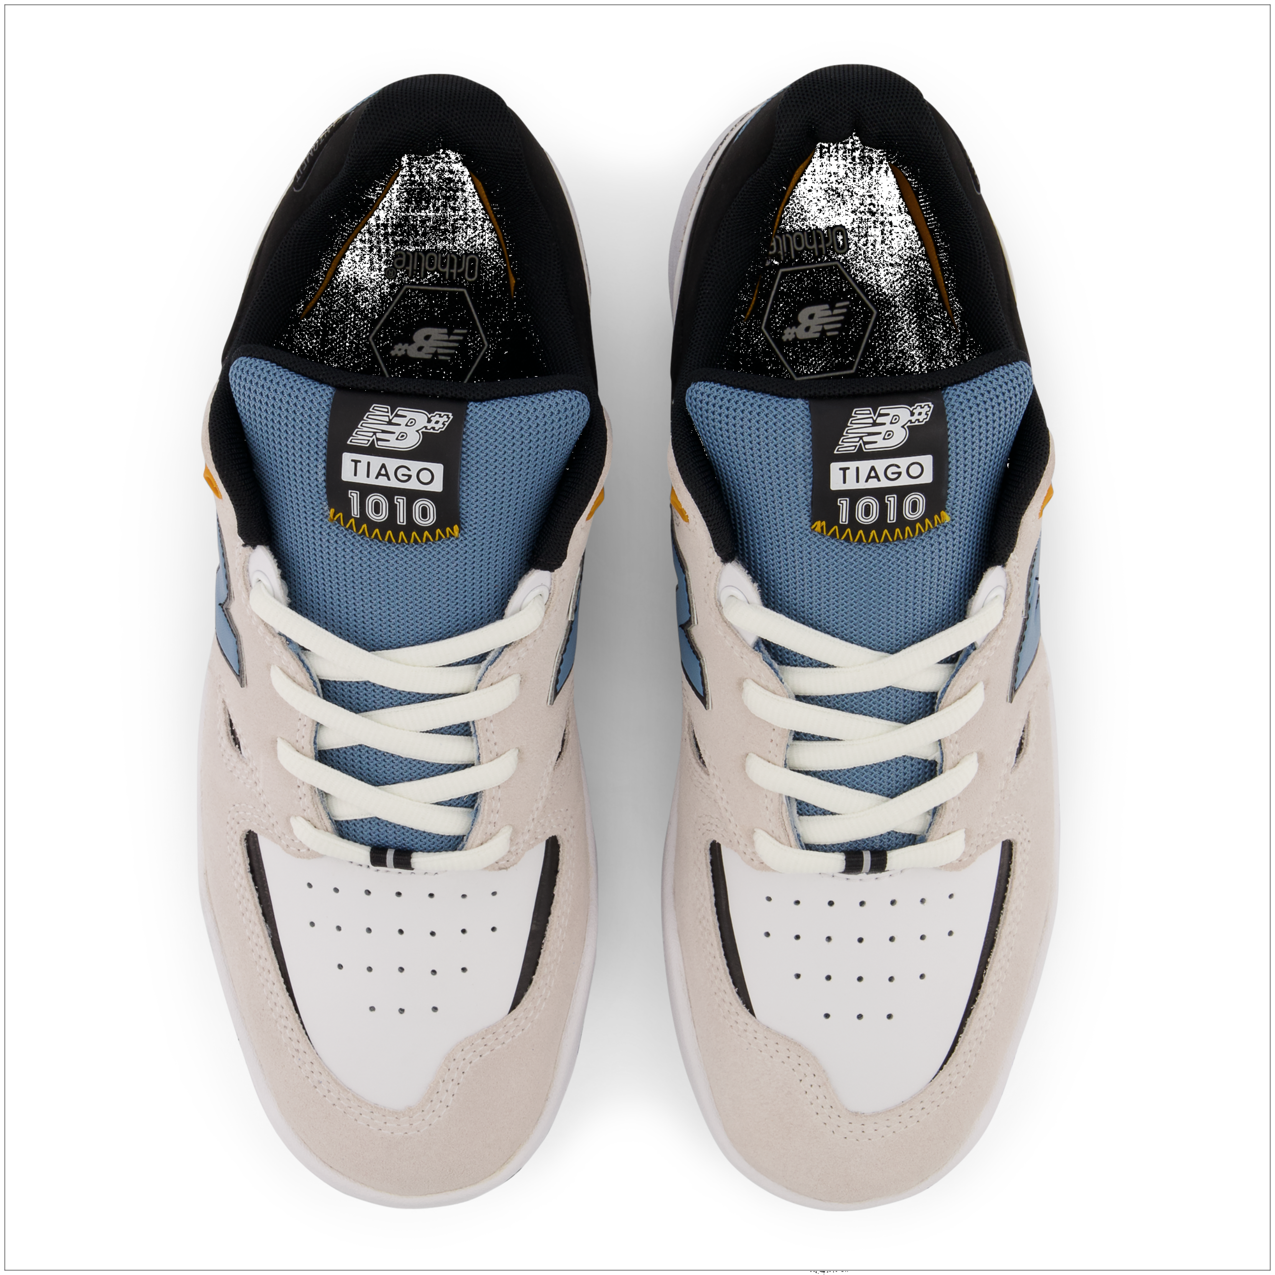 New Balance Numeric Men's Tiago Lemos 1010 White Blue Shoes